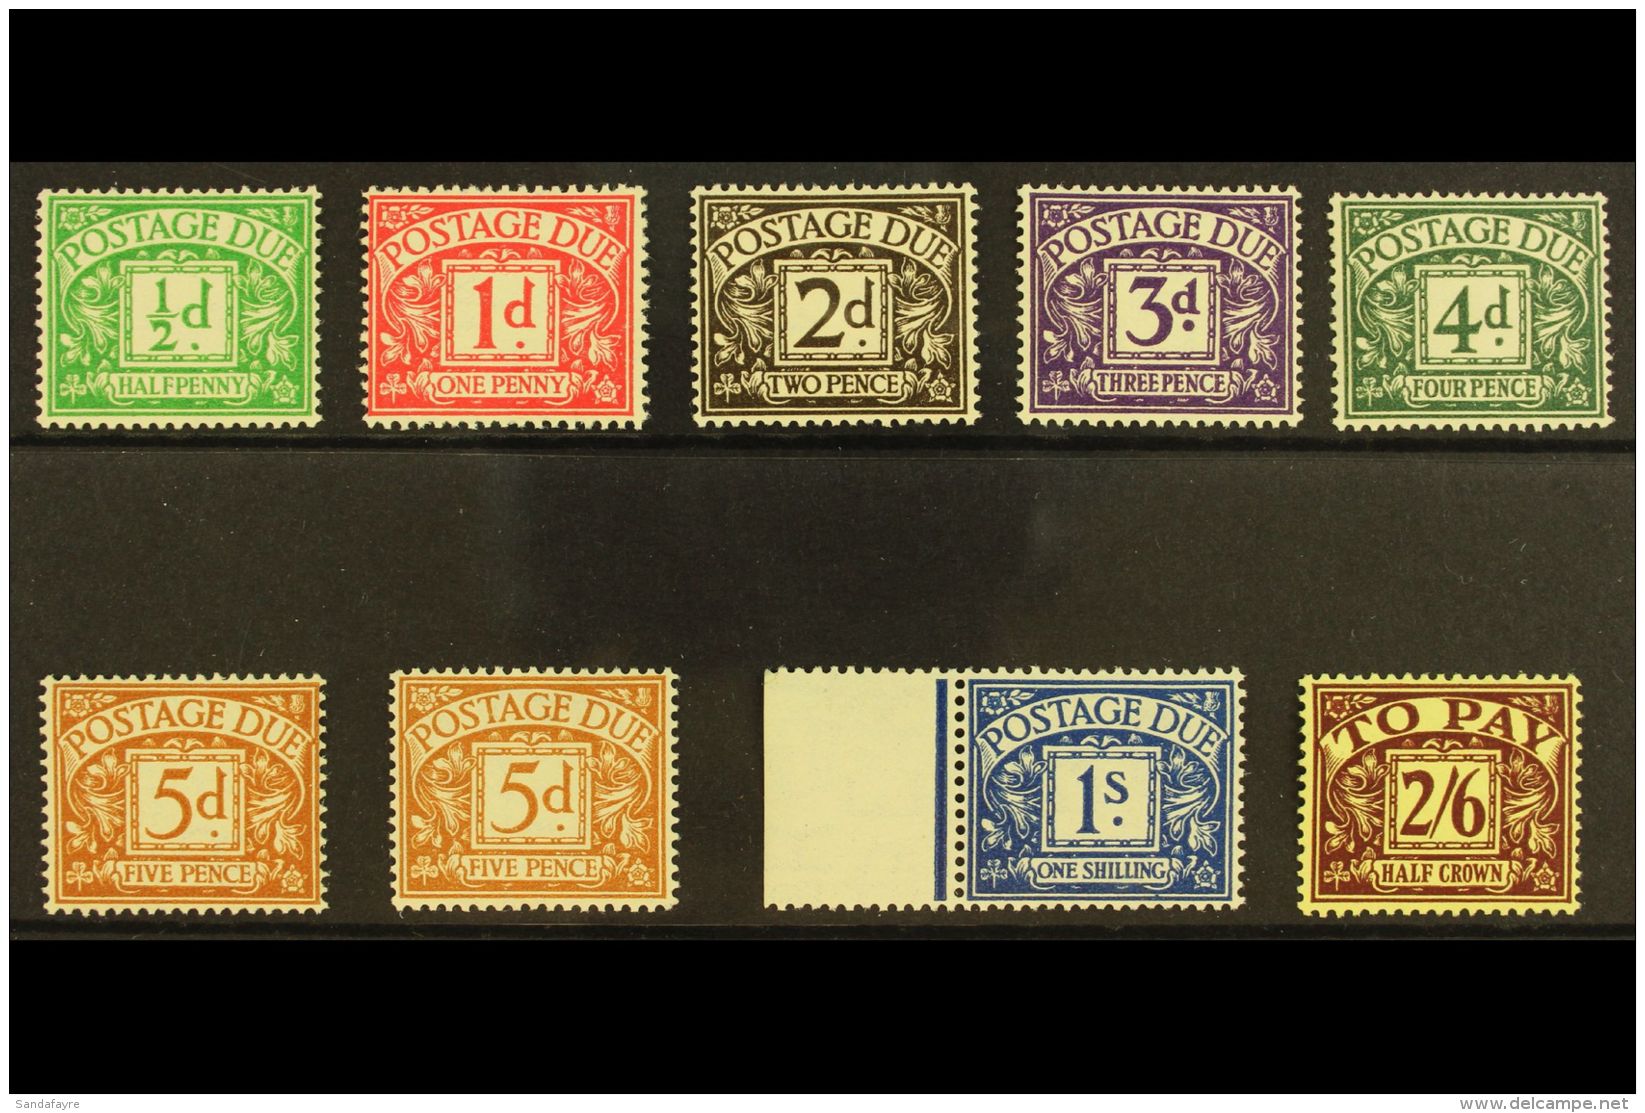 POSTAGE DUES 1936-7 KEVIII Set, Wmk "E 8 R" With Both 5d Shades, SG D19/25, D24a, Very Fine Mint, Some Values... - Non Classés